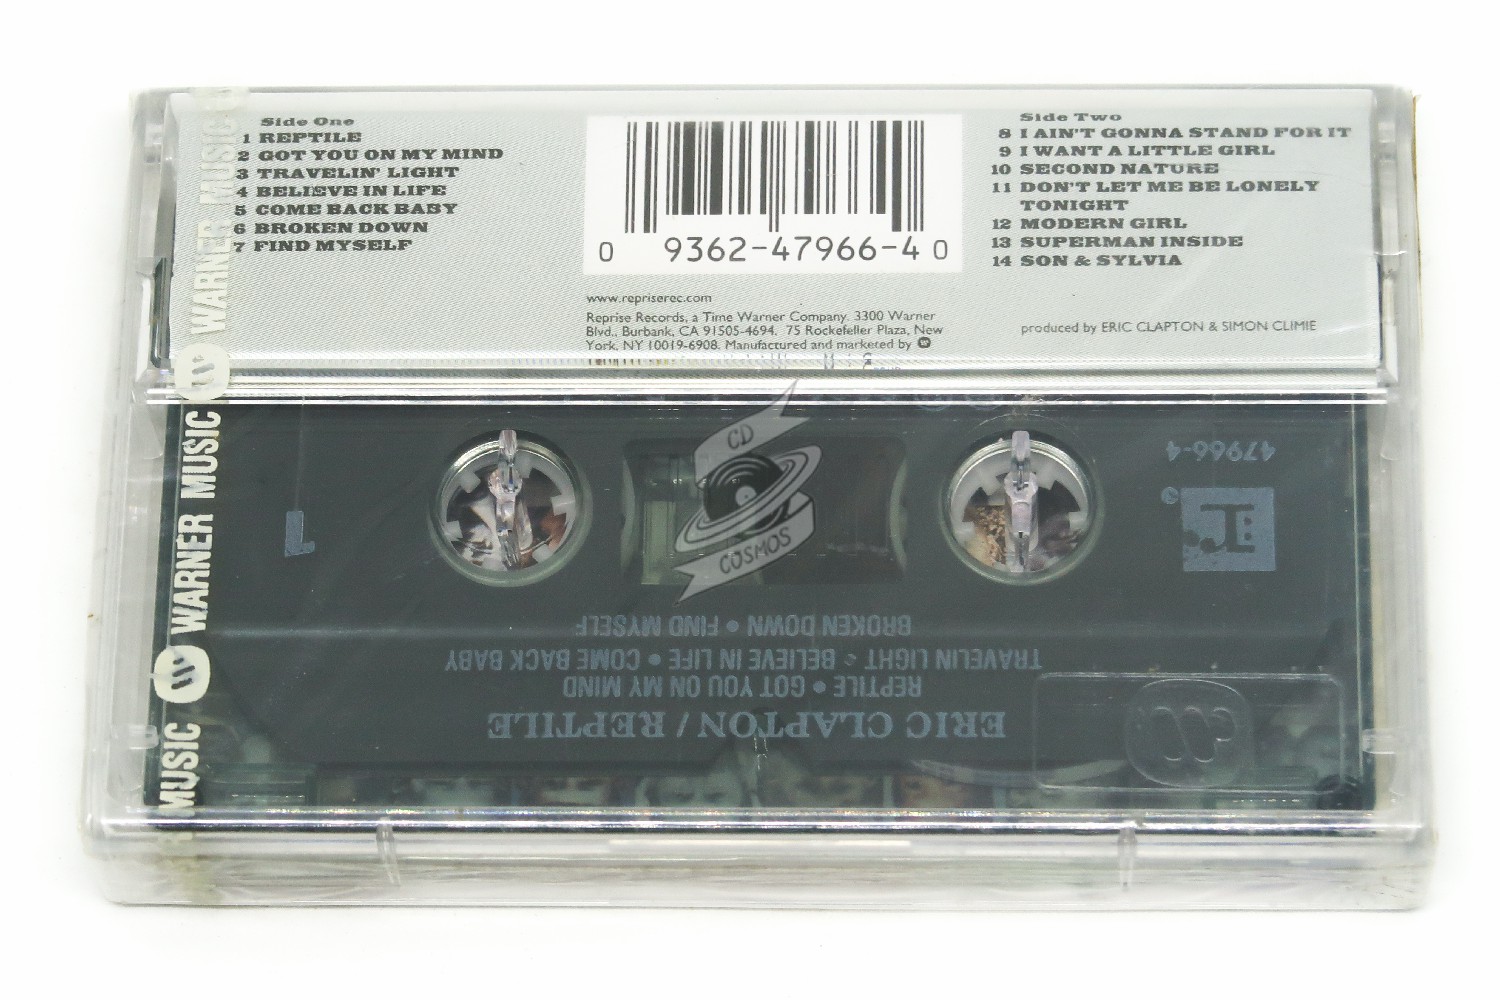 Eric Clapton - Pretending - Audio Cassette Single - 1989 Reprise Records